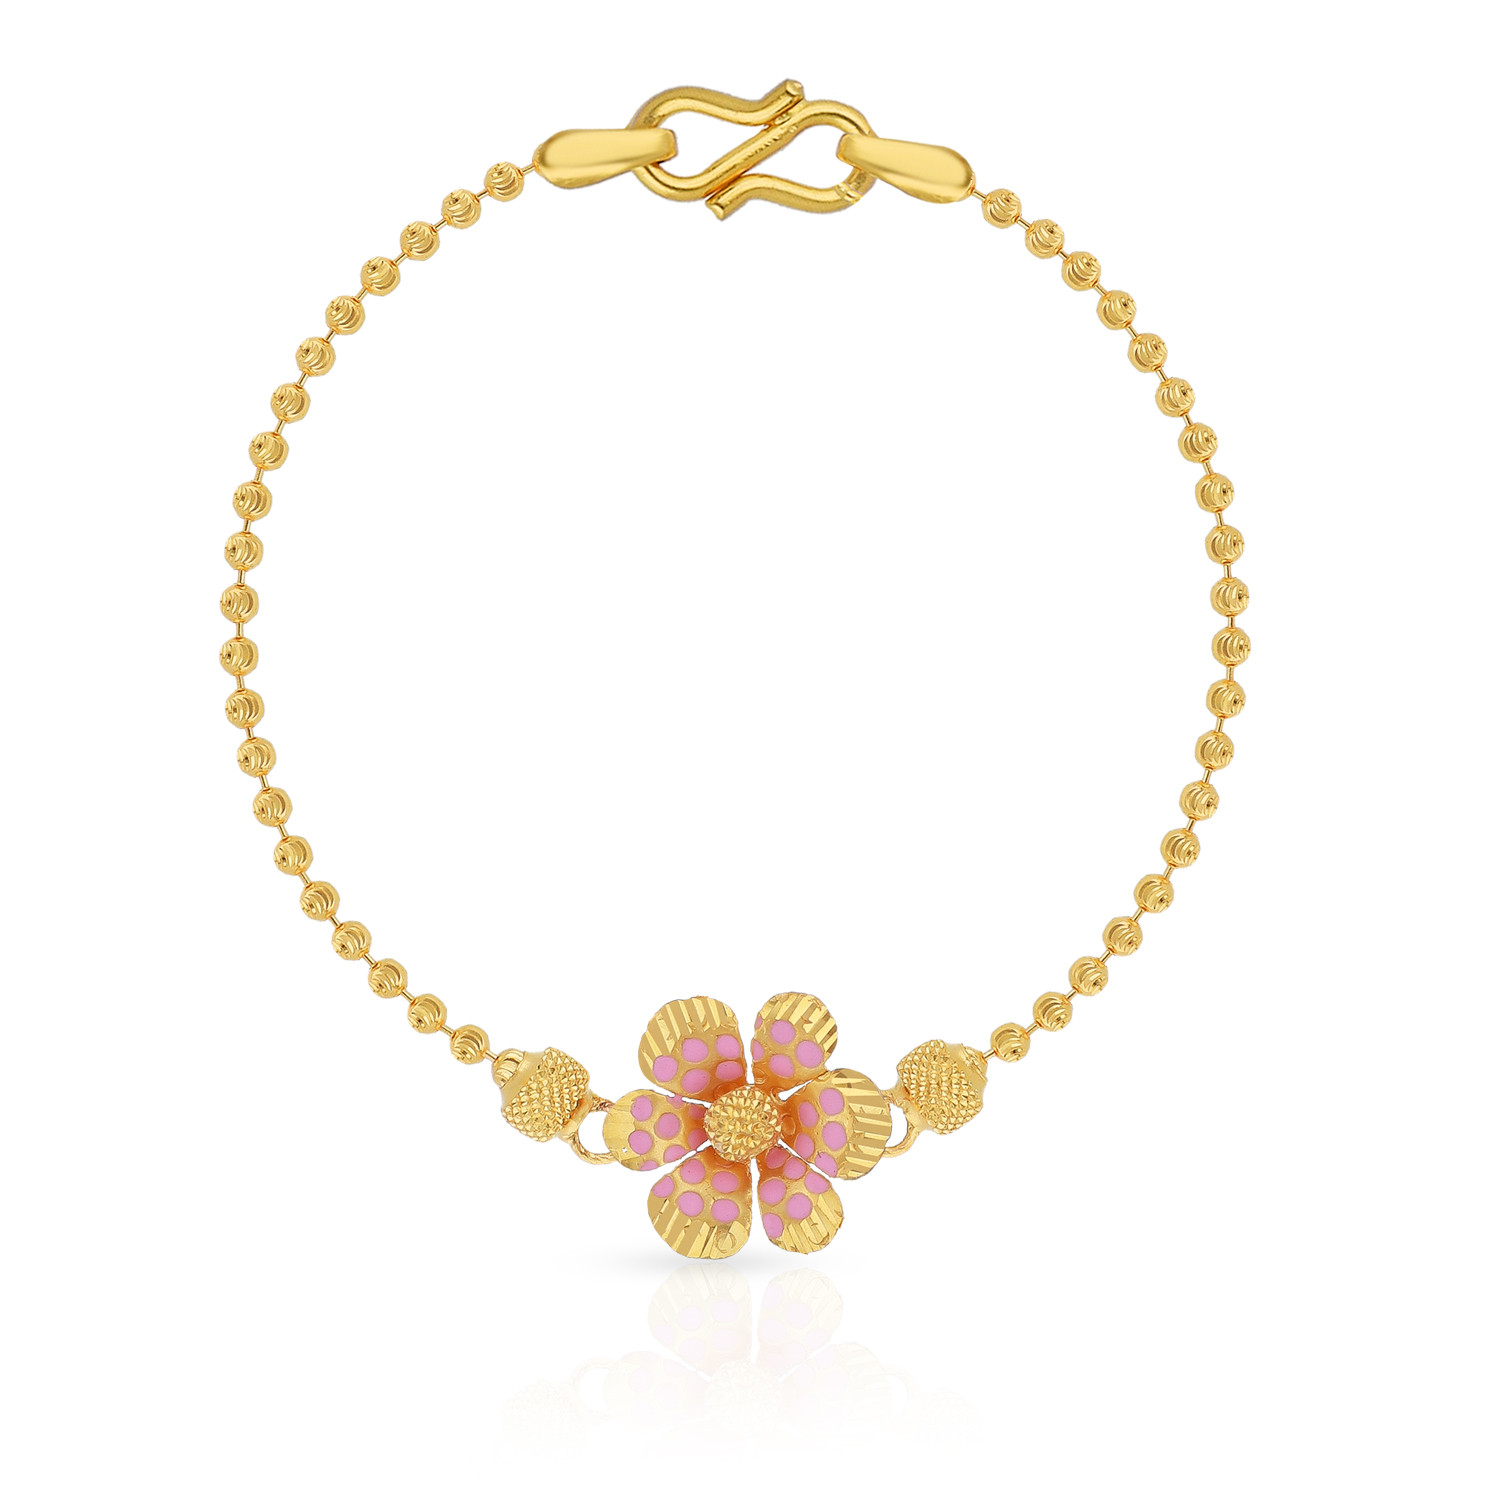 Malabar Gold and Diamonds 22k 916 Yellow Gold Bracelet for Women   Amazonin Fashion